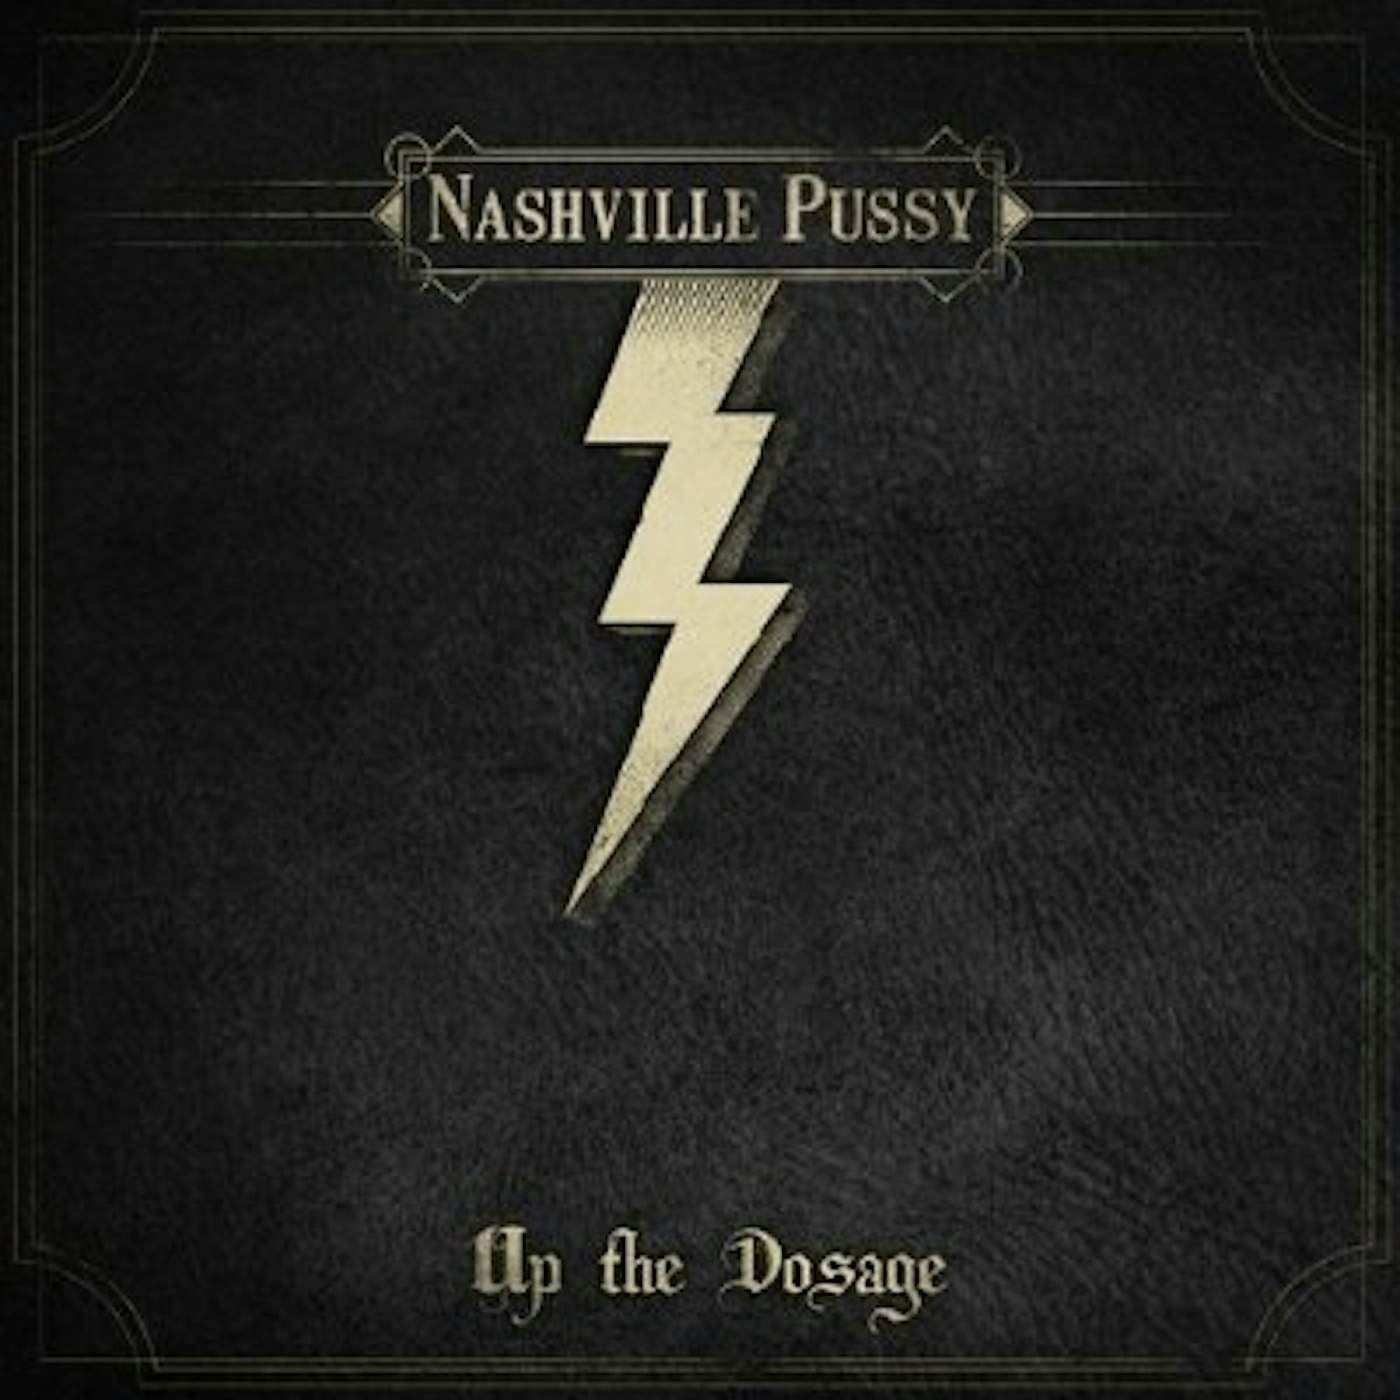 Nashville Pussy UP THE DOSAGE CD